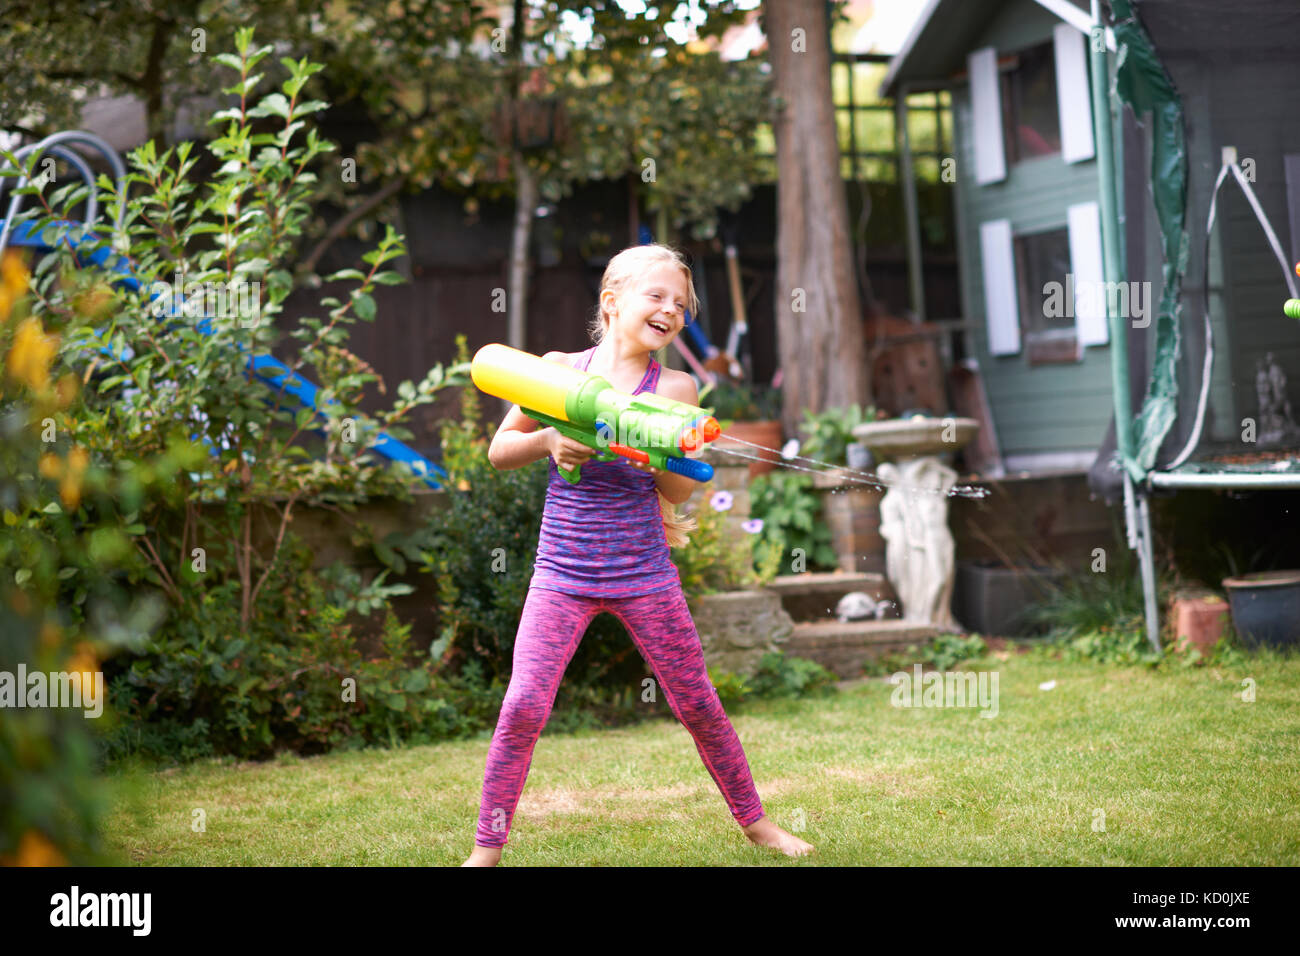 Girl squirting water gun in garden Stock Photo